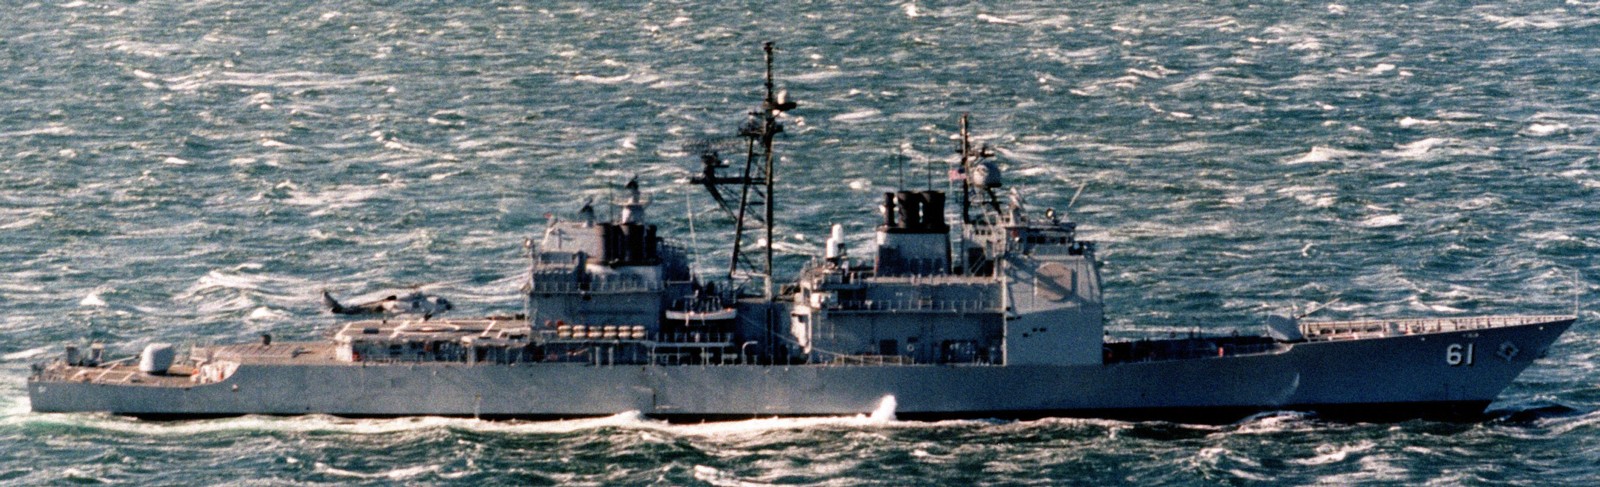 cg-61 uss monterey ticonderoga class guided missile cruiser aegis us navy 147